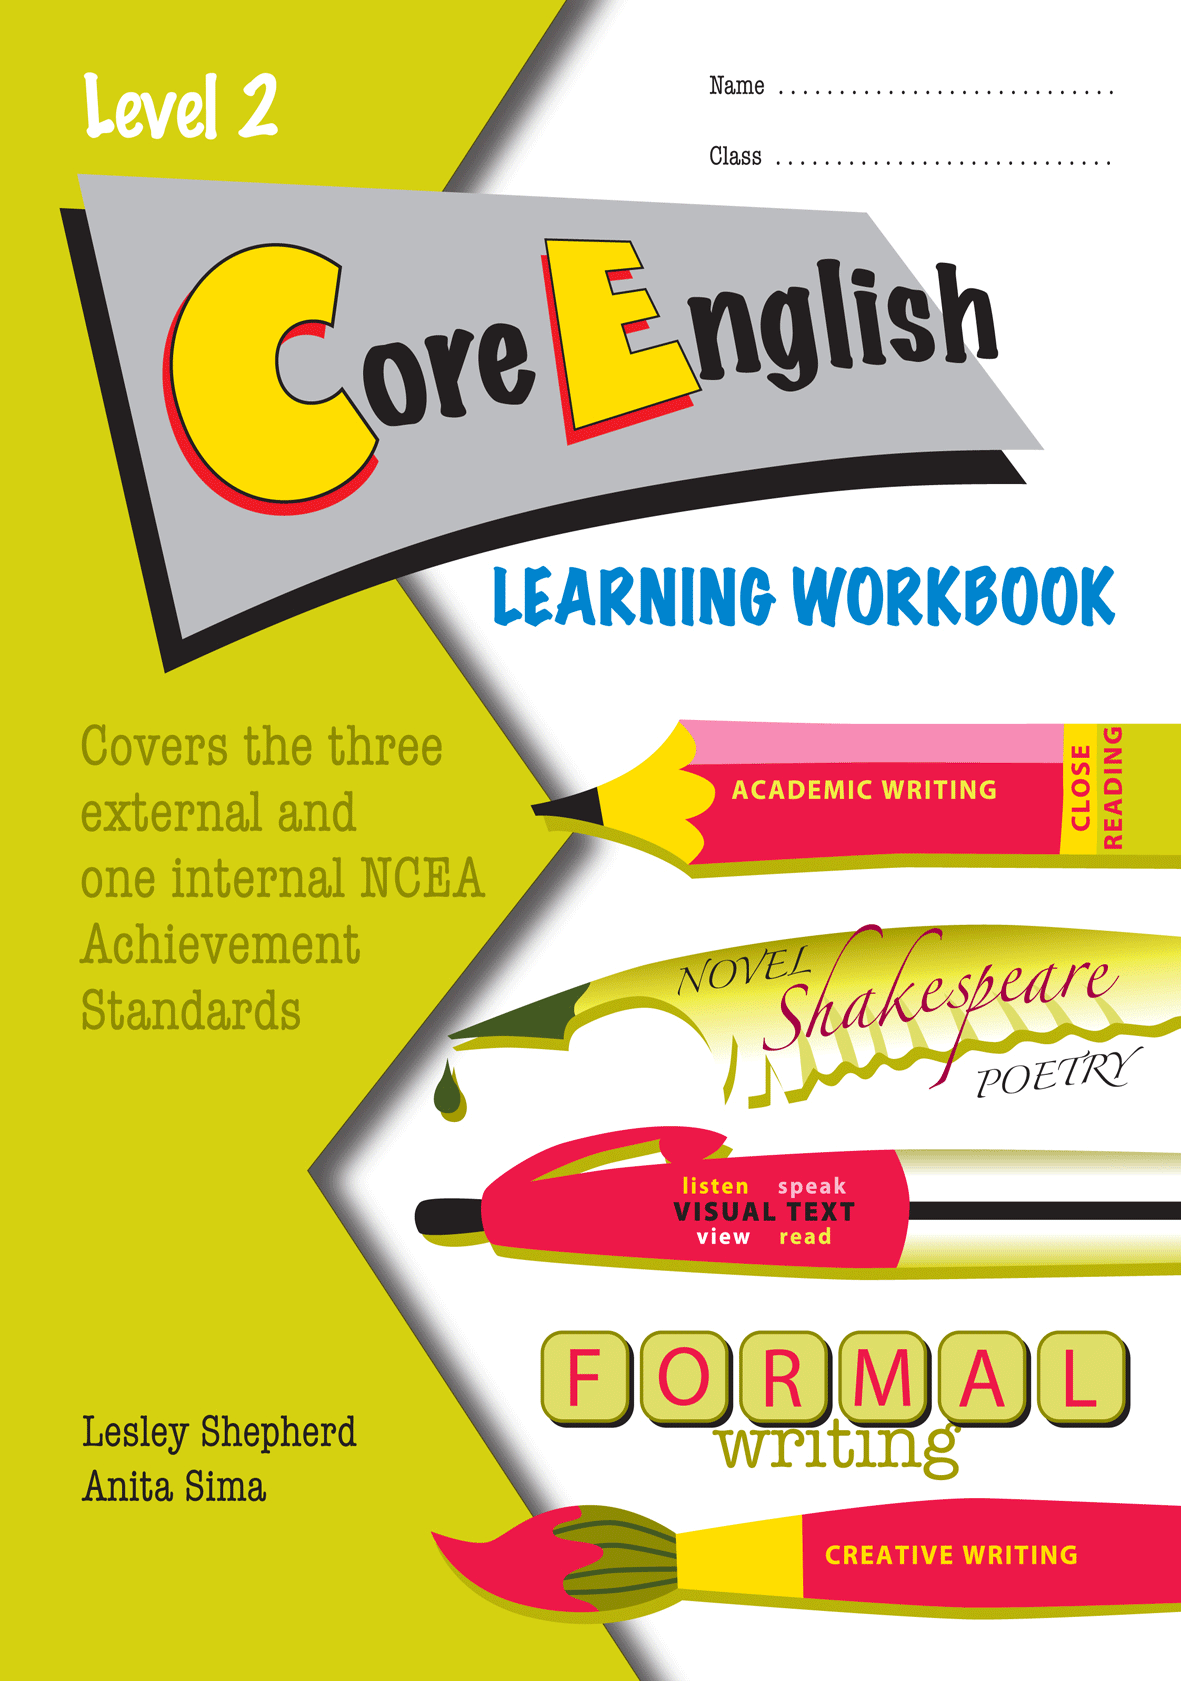 Level 2 CORE English Learning Workbook